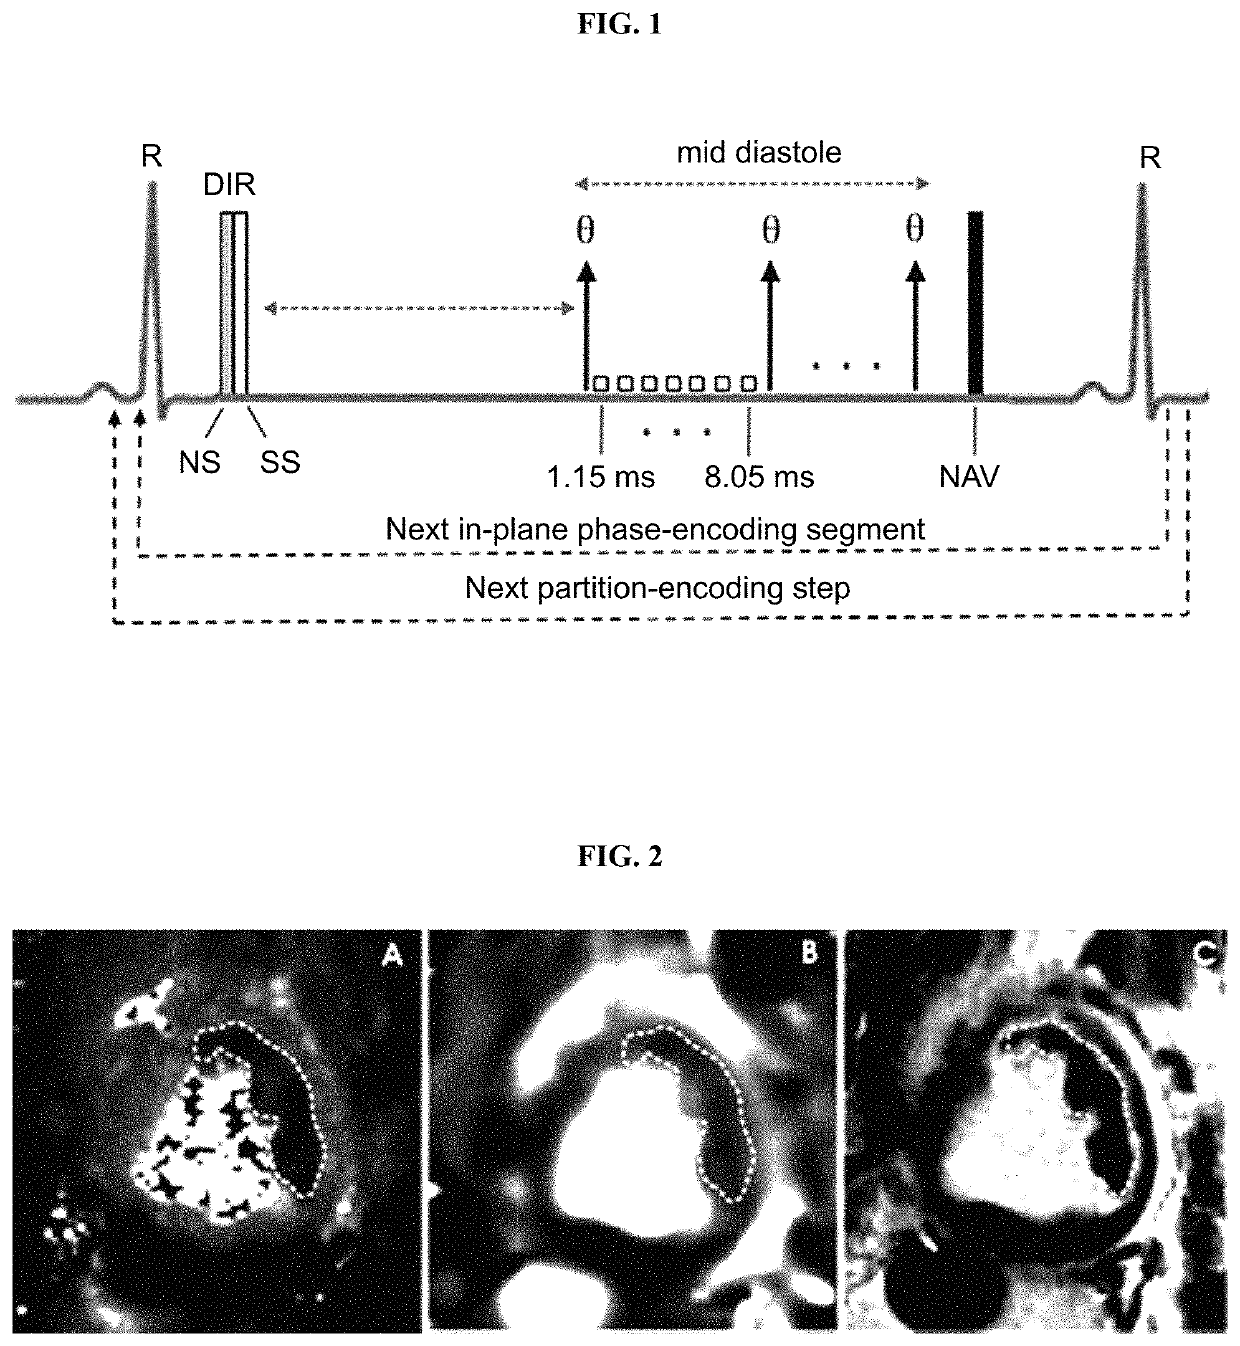 Assessment of iron deposition post myocardial infarction as a marker of myocardial hemorrhage